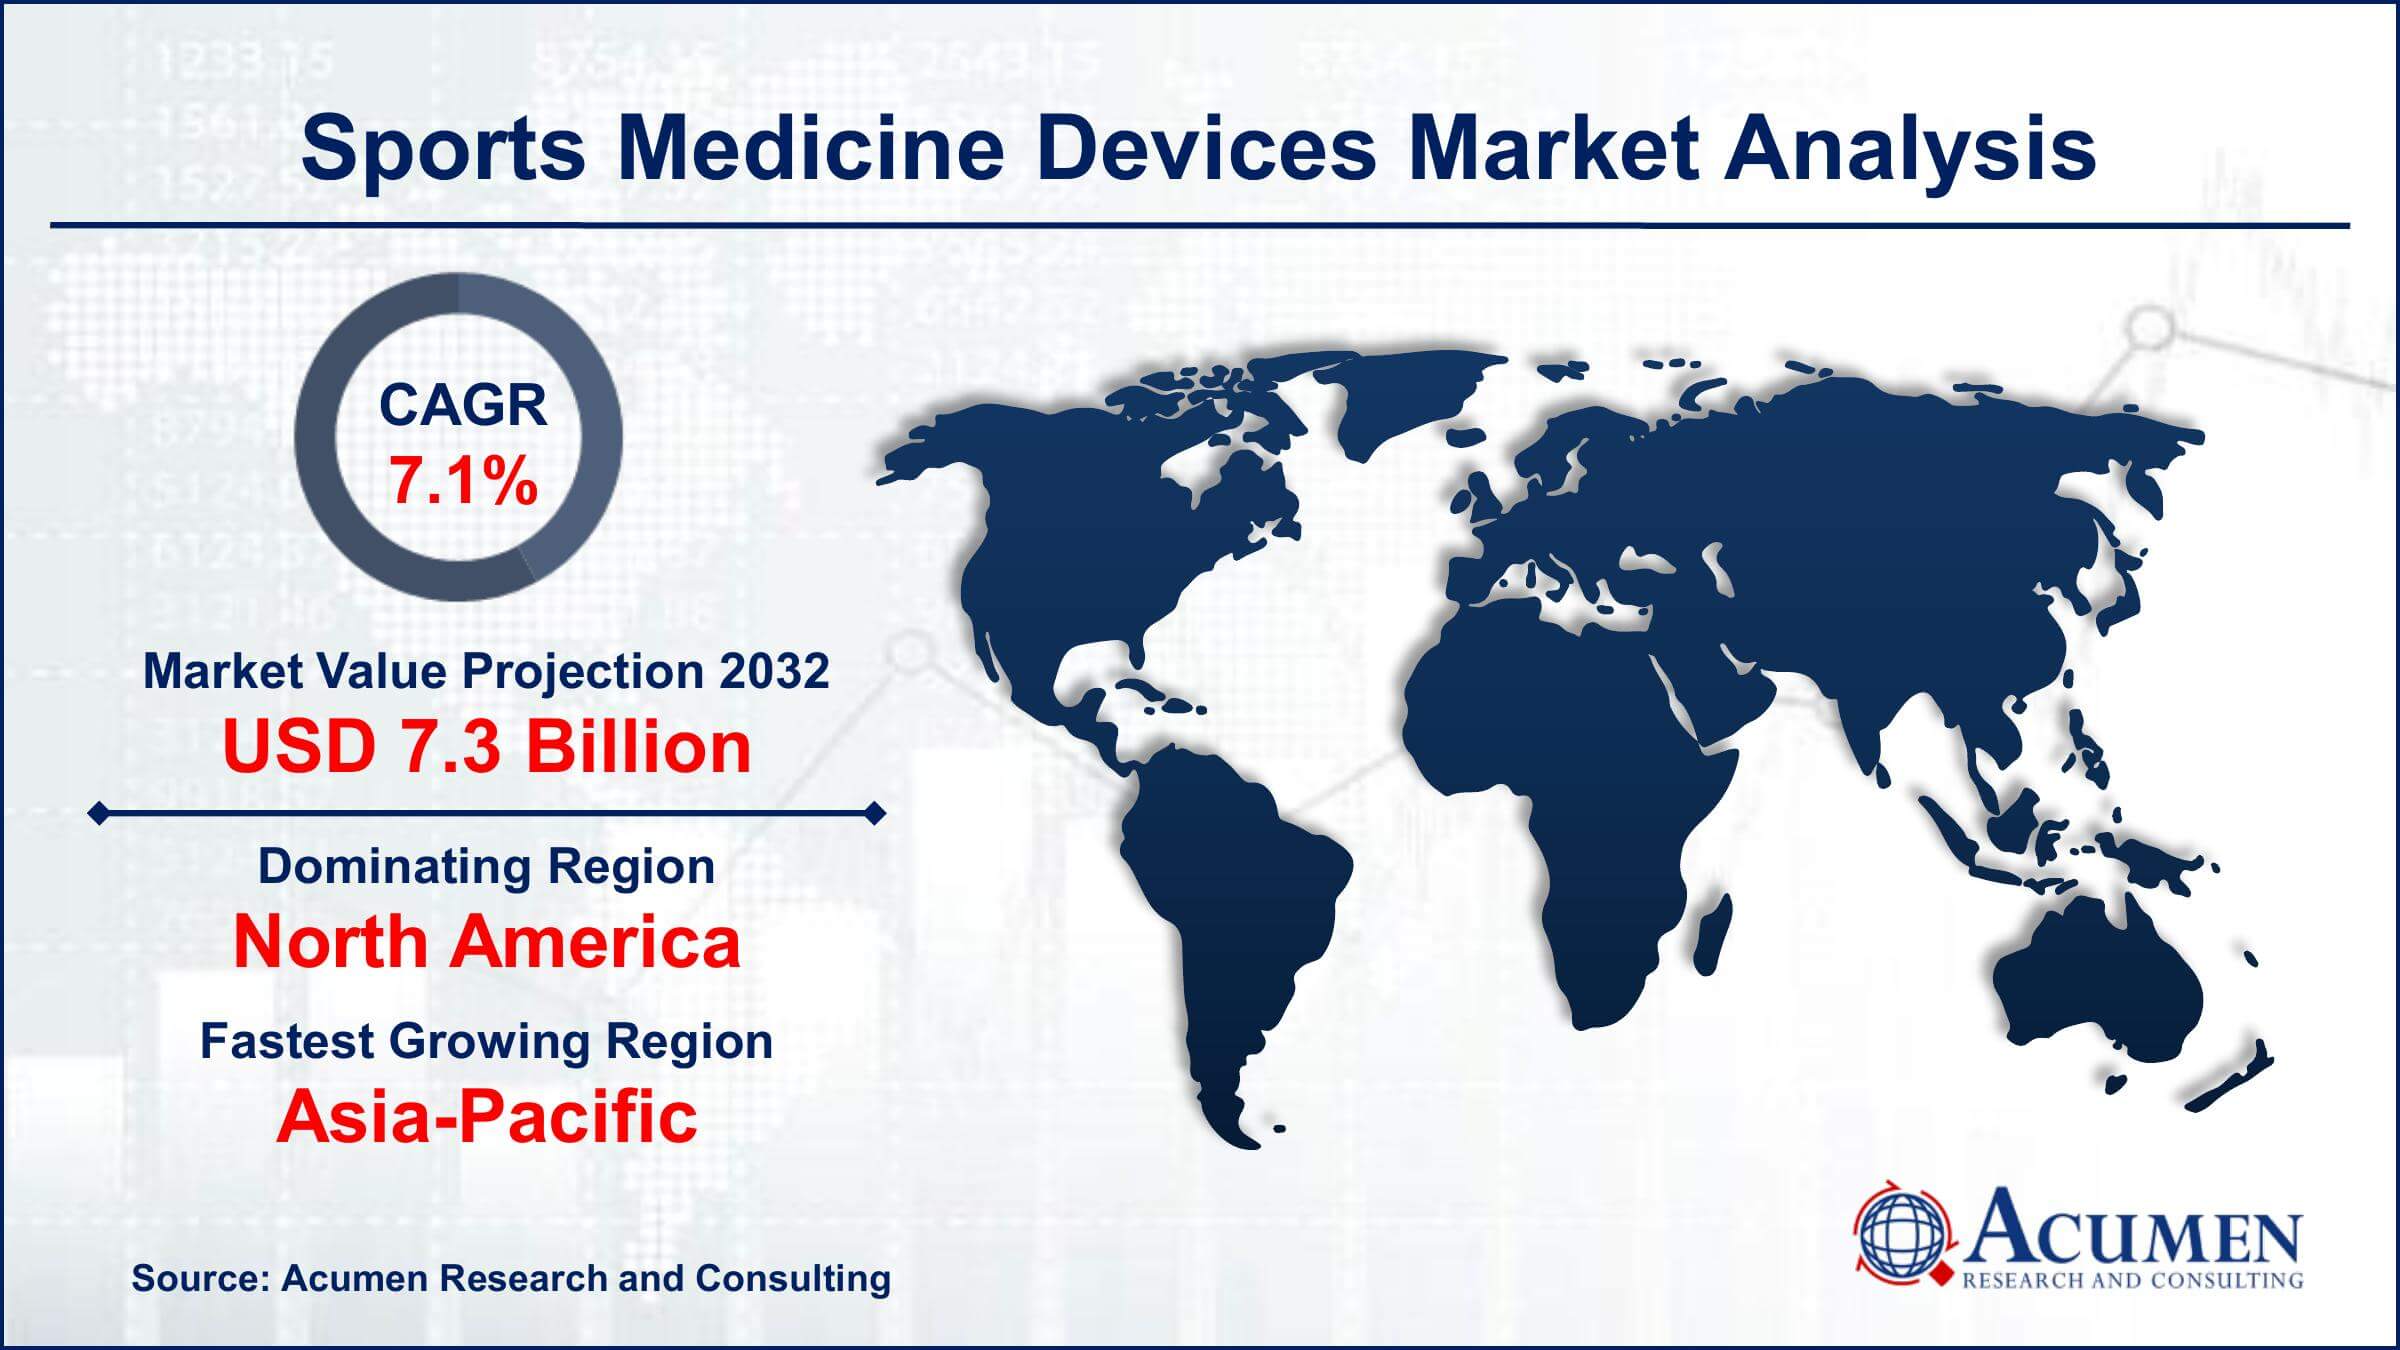 Global Sports Medicine Devices Market Trends